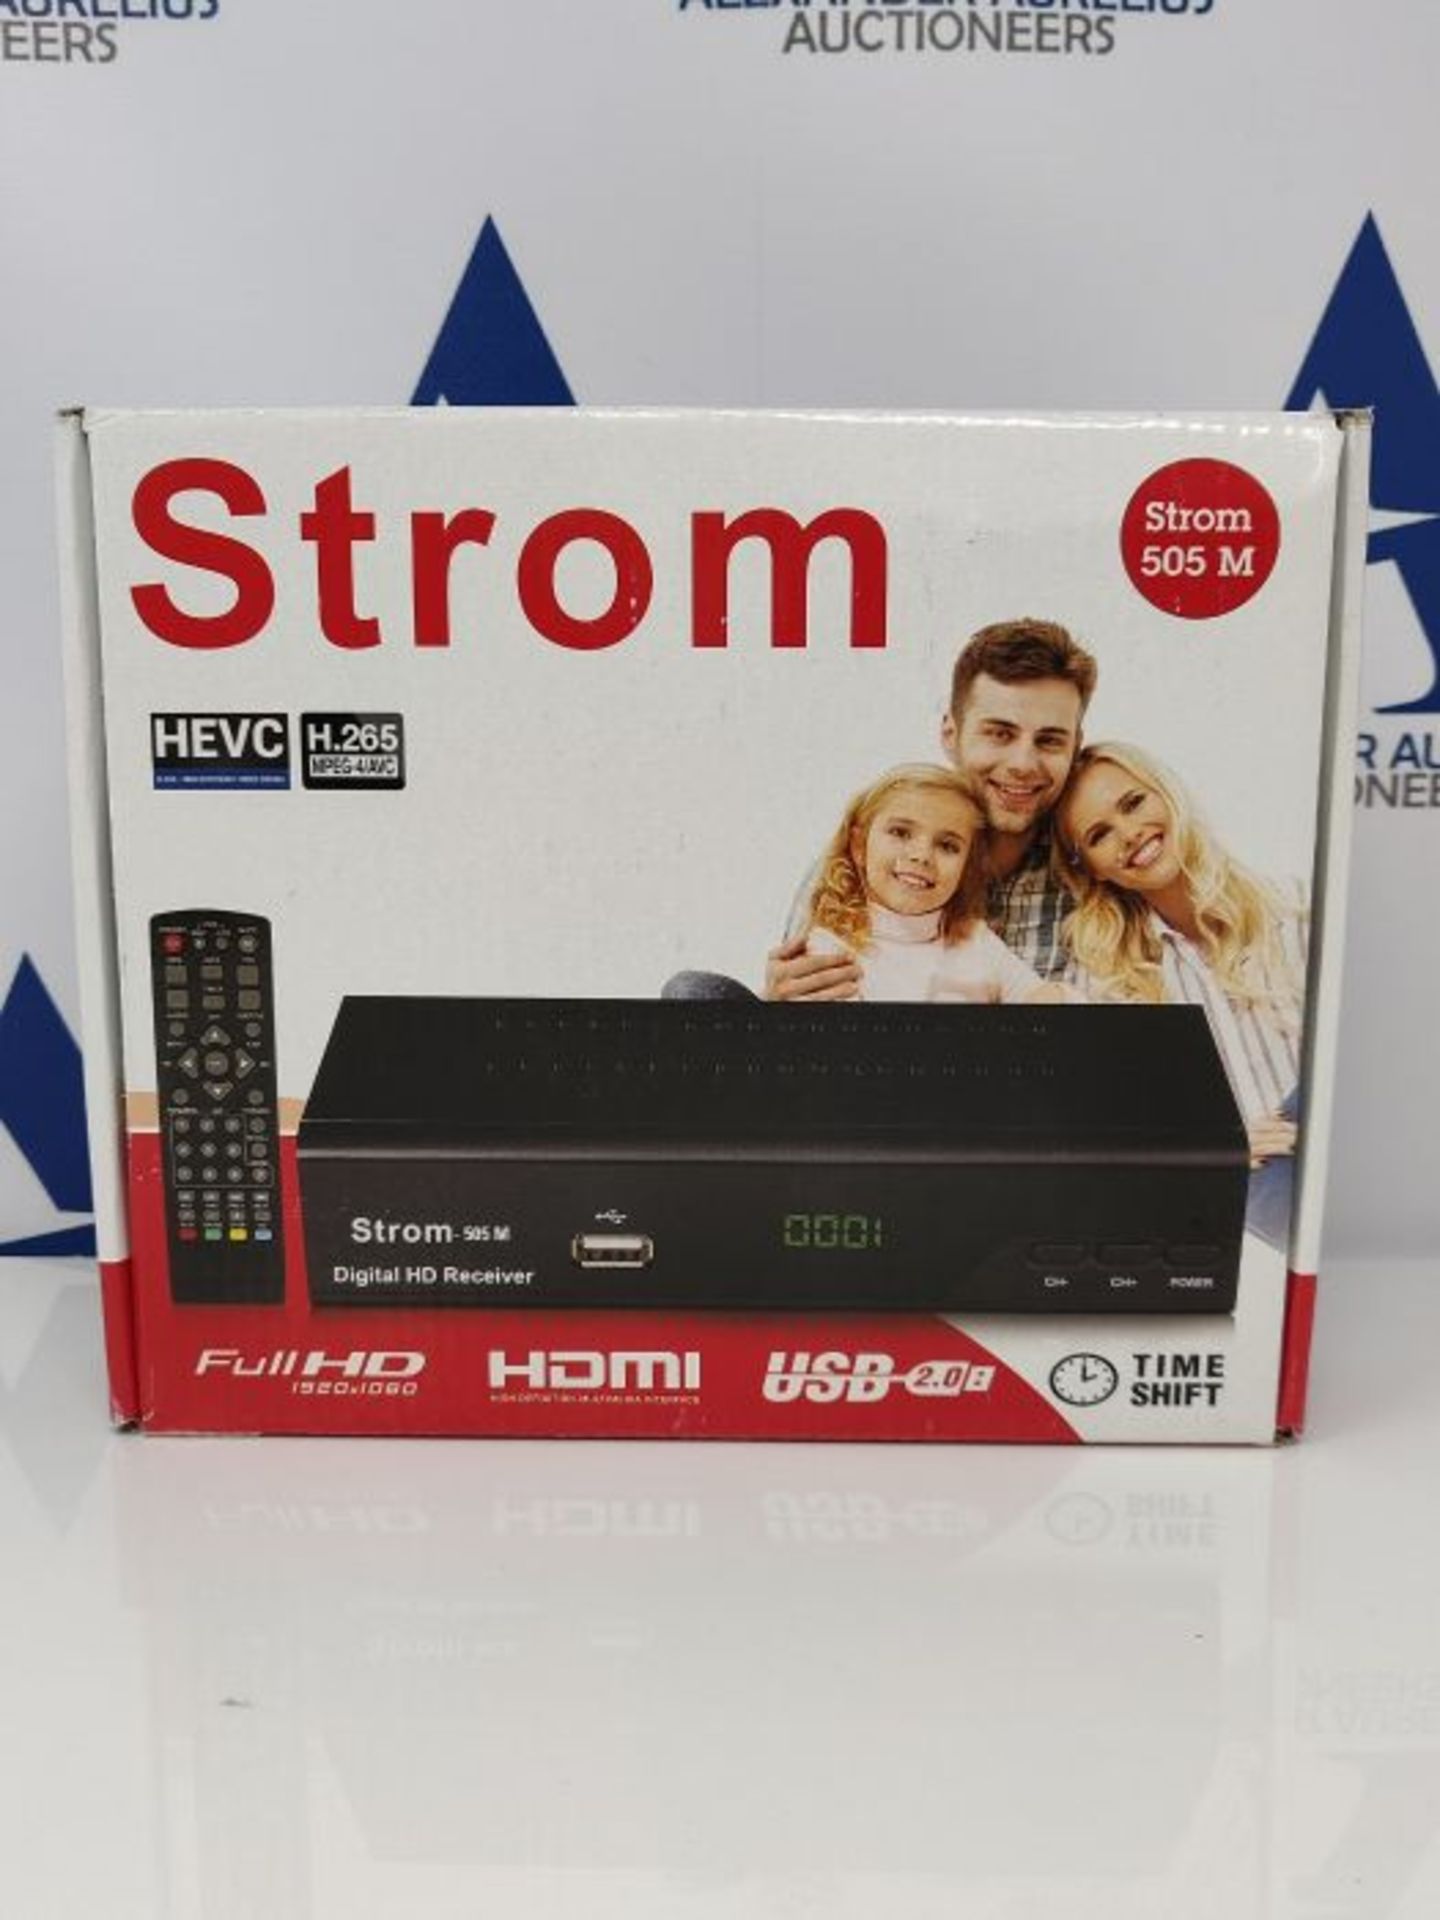 Strom-505 H.265 HEVC Receiver HD-DVB-T2 HDMI Full HD PVR USB Mediaplayer - Image 2 of 3